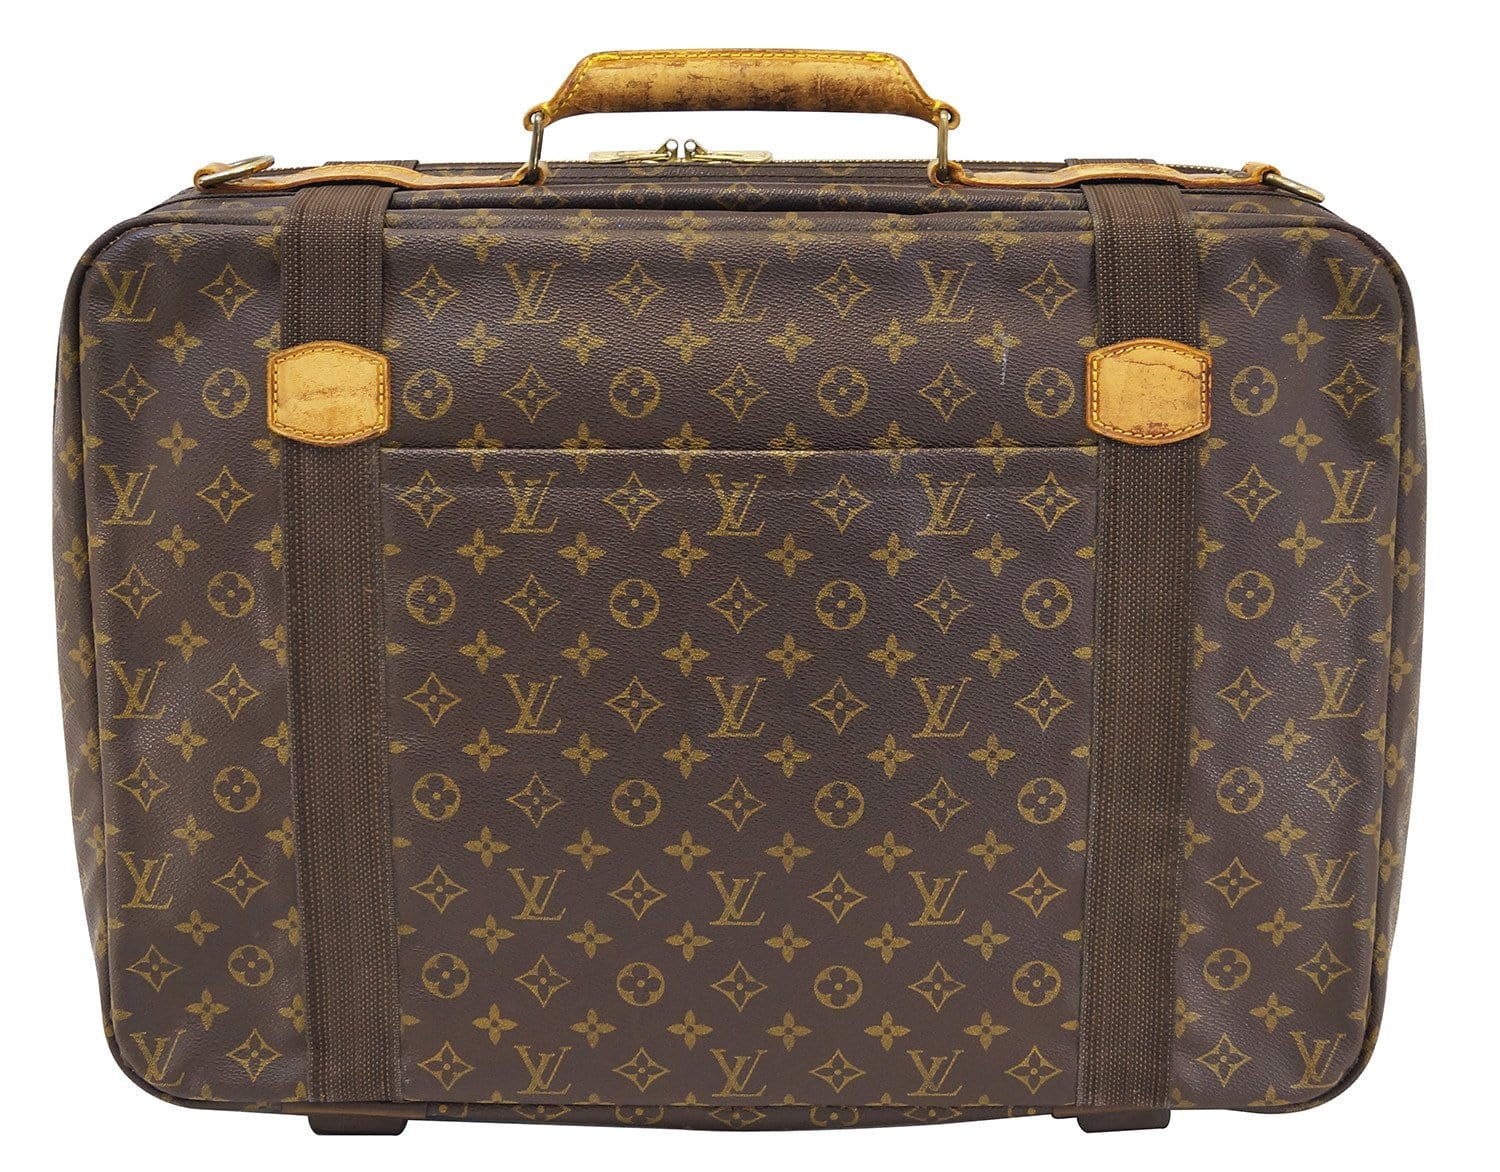 Louis Vuitton monogram LV suitcase